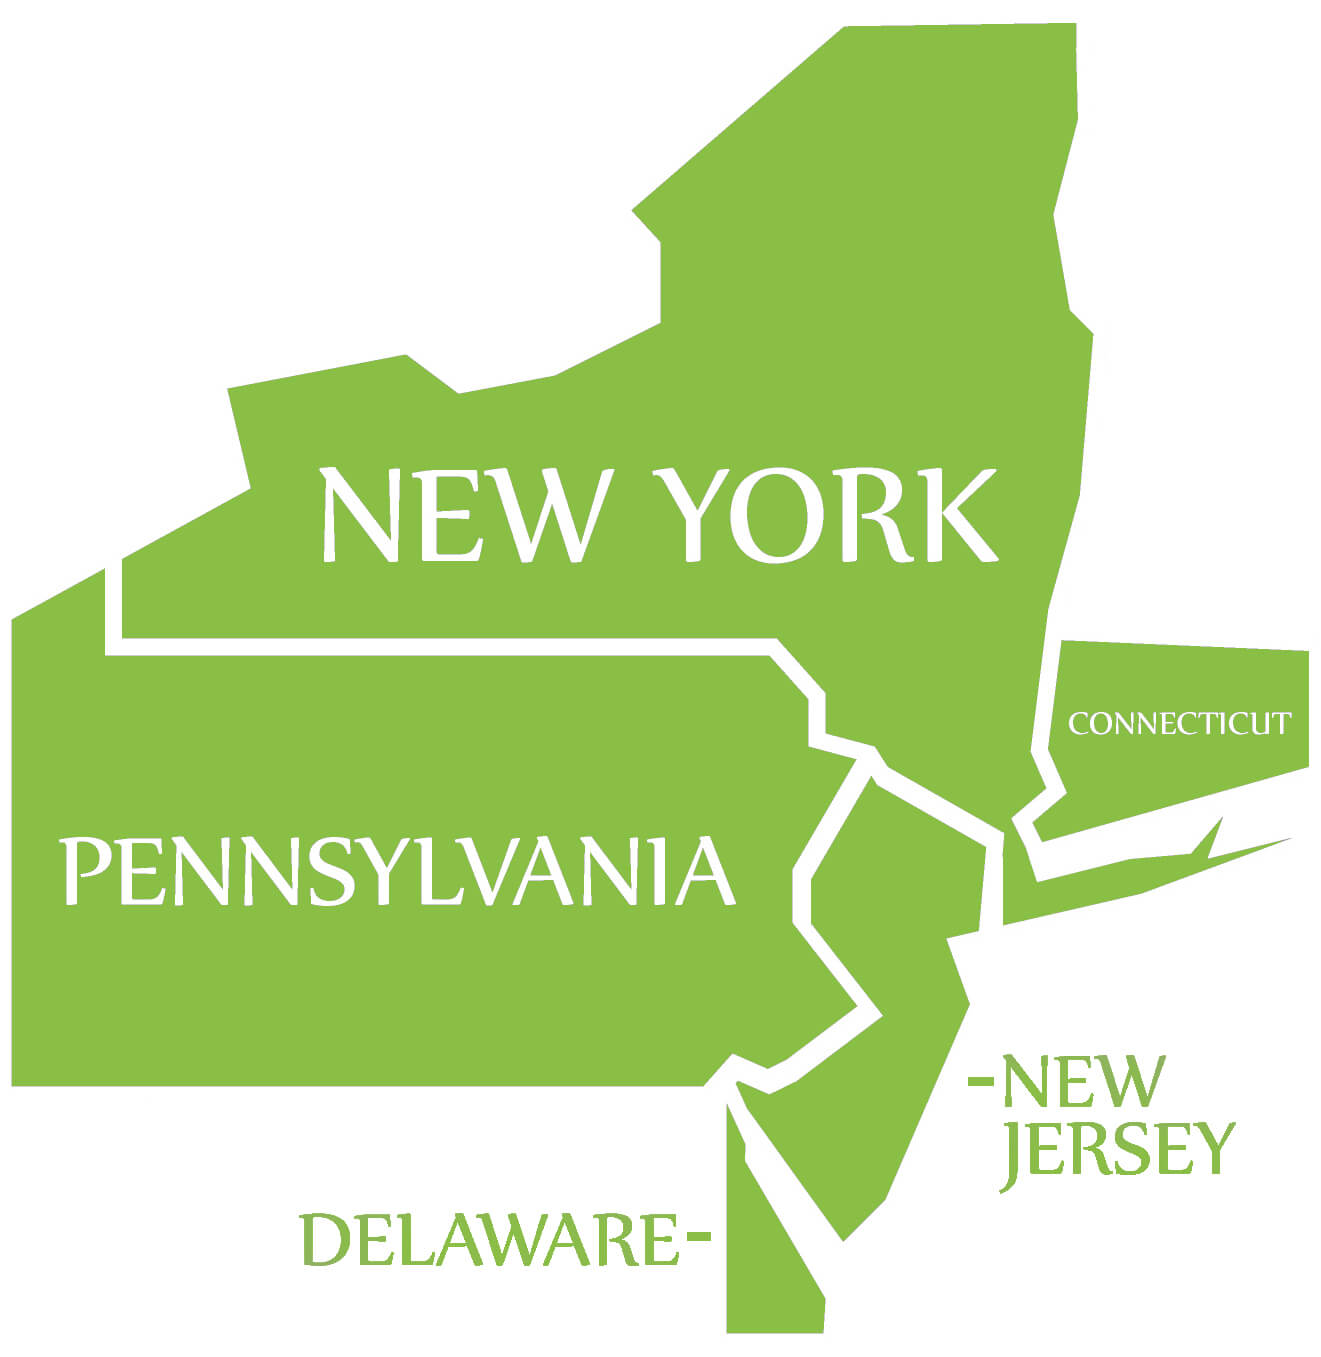 Industrial Ventilation Company serving CT, DE, NY, NJ and PA